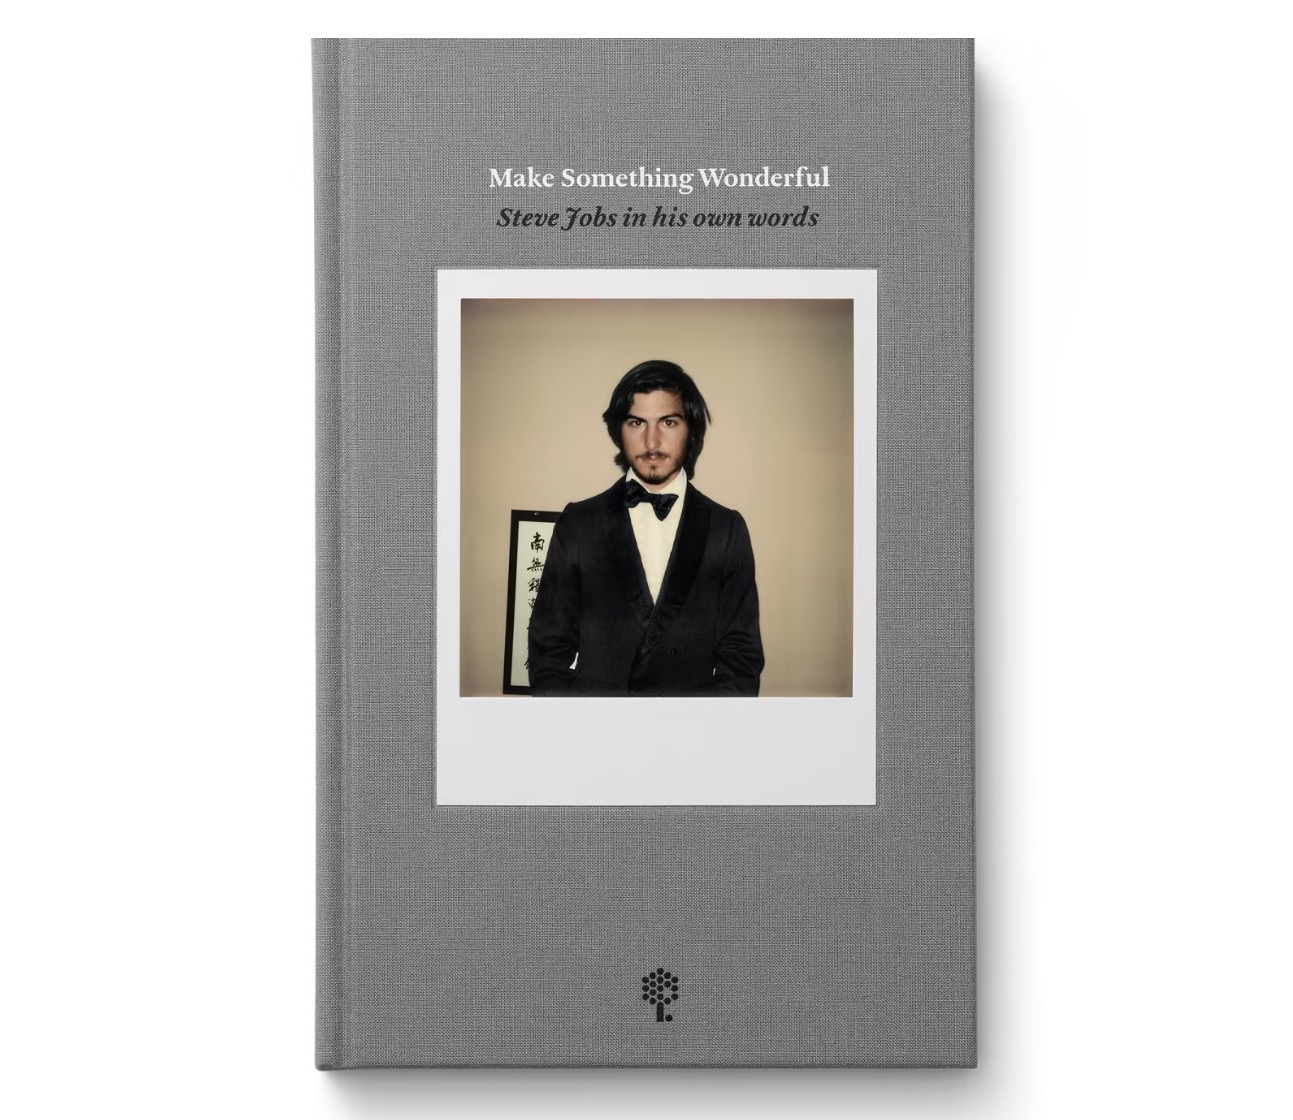 A book of Steve Jobs in his own words, Make Something Wonderful